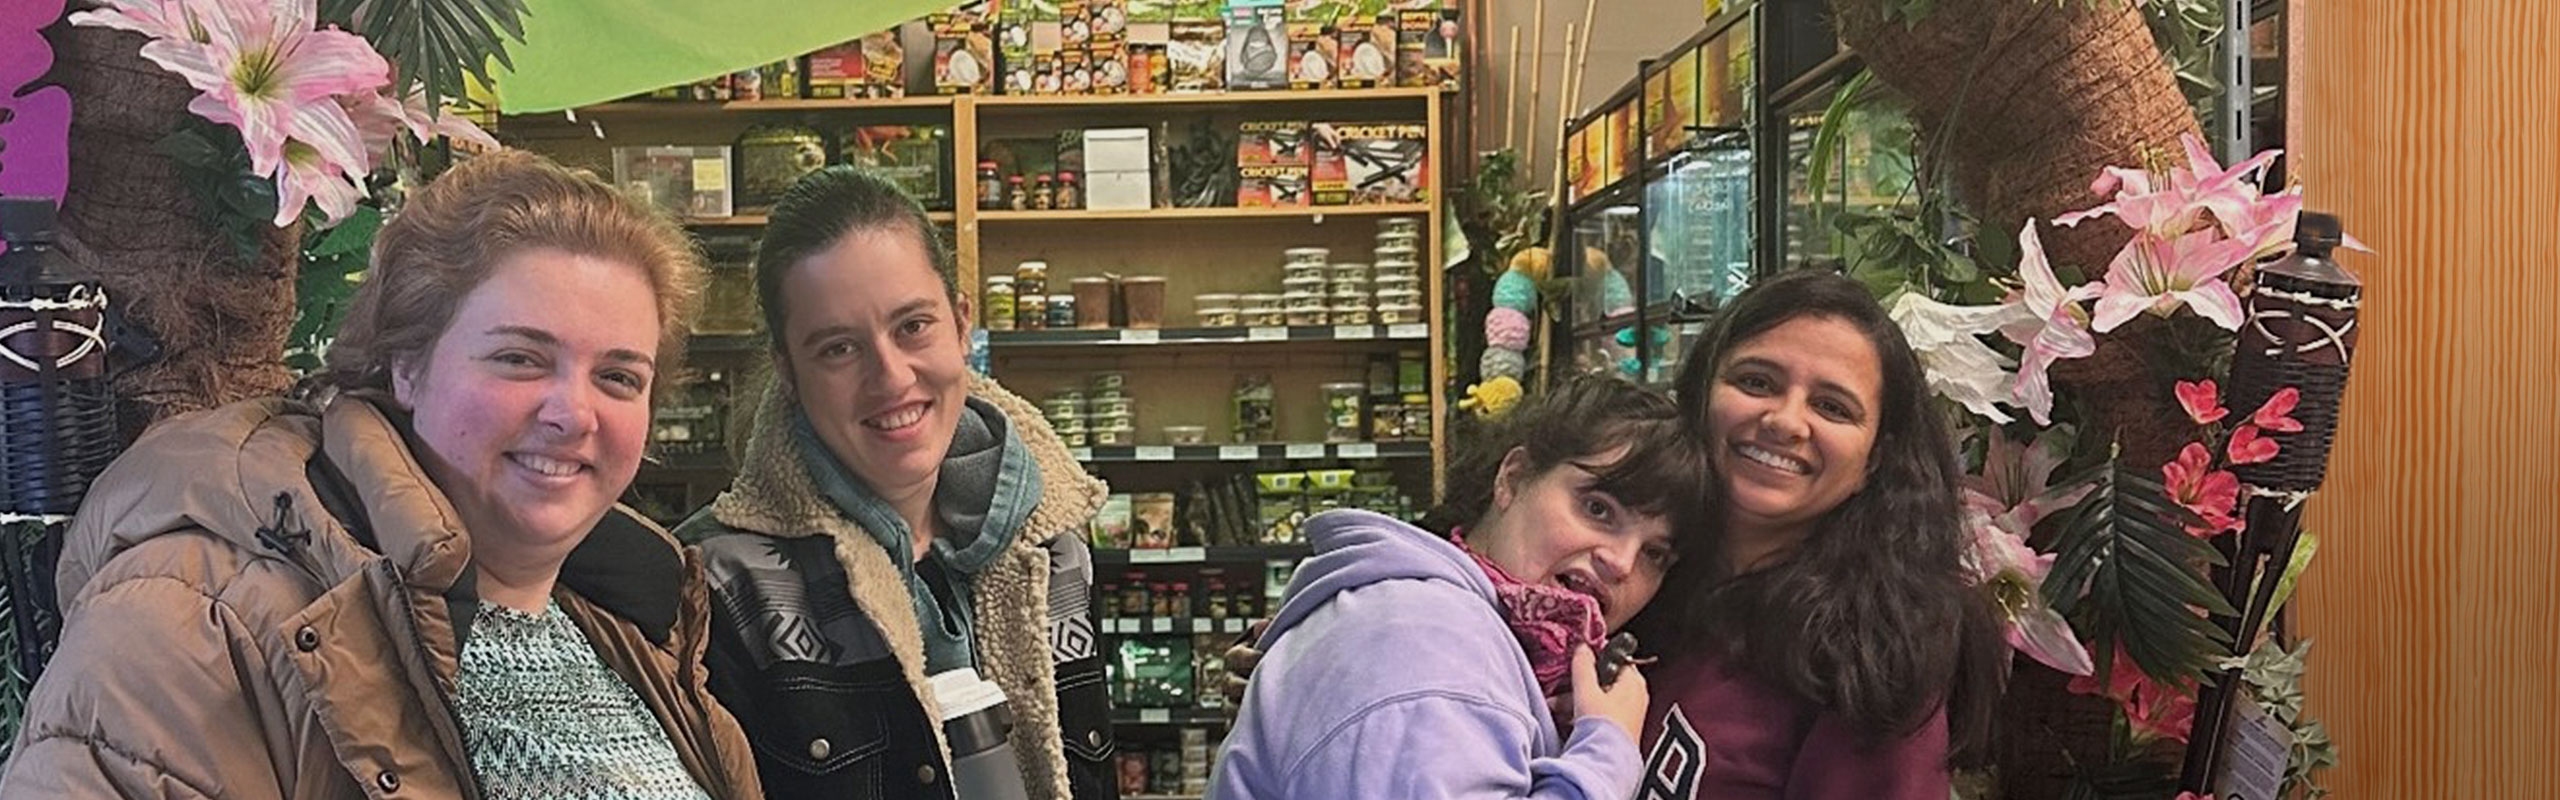 4 smiling women in pet store